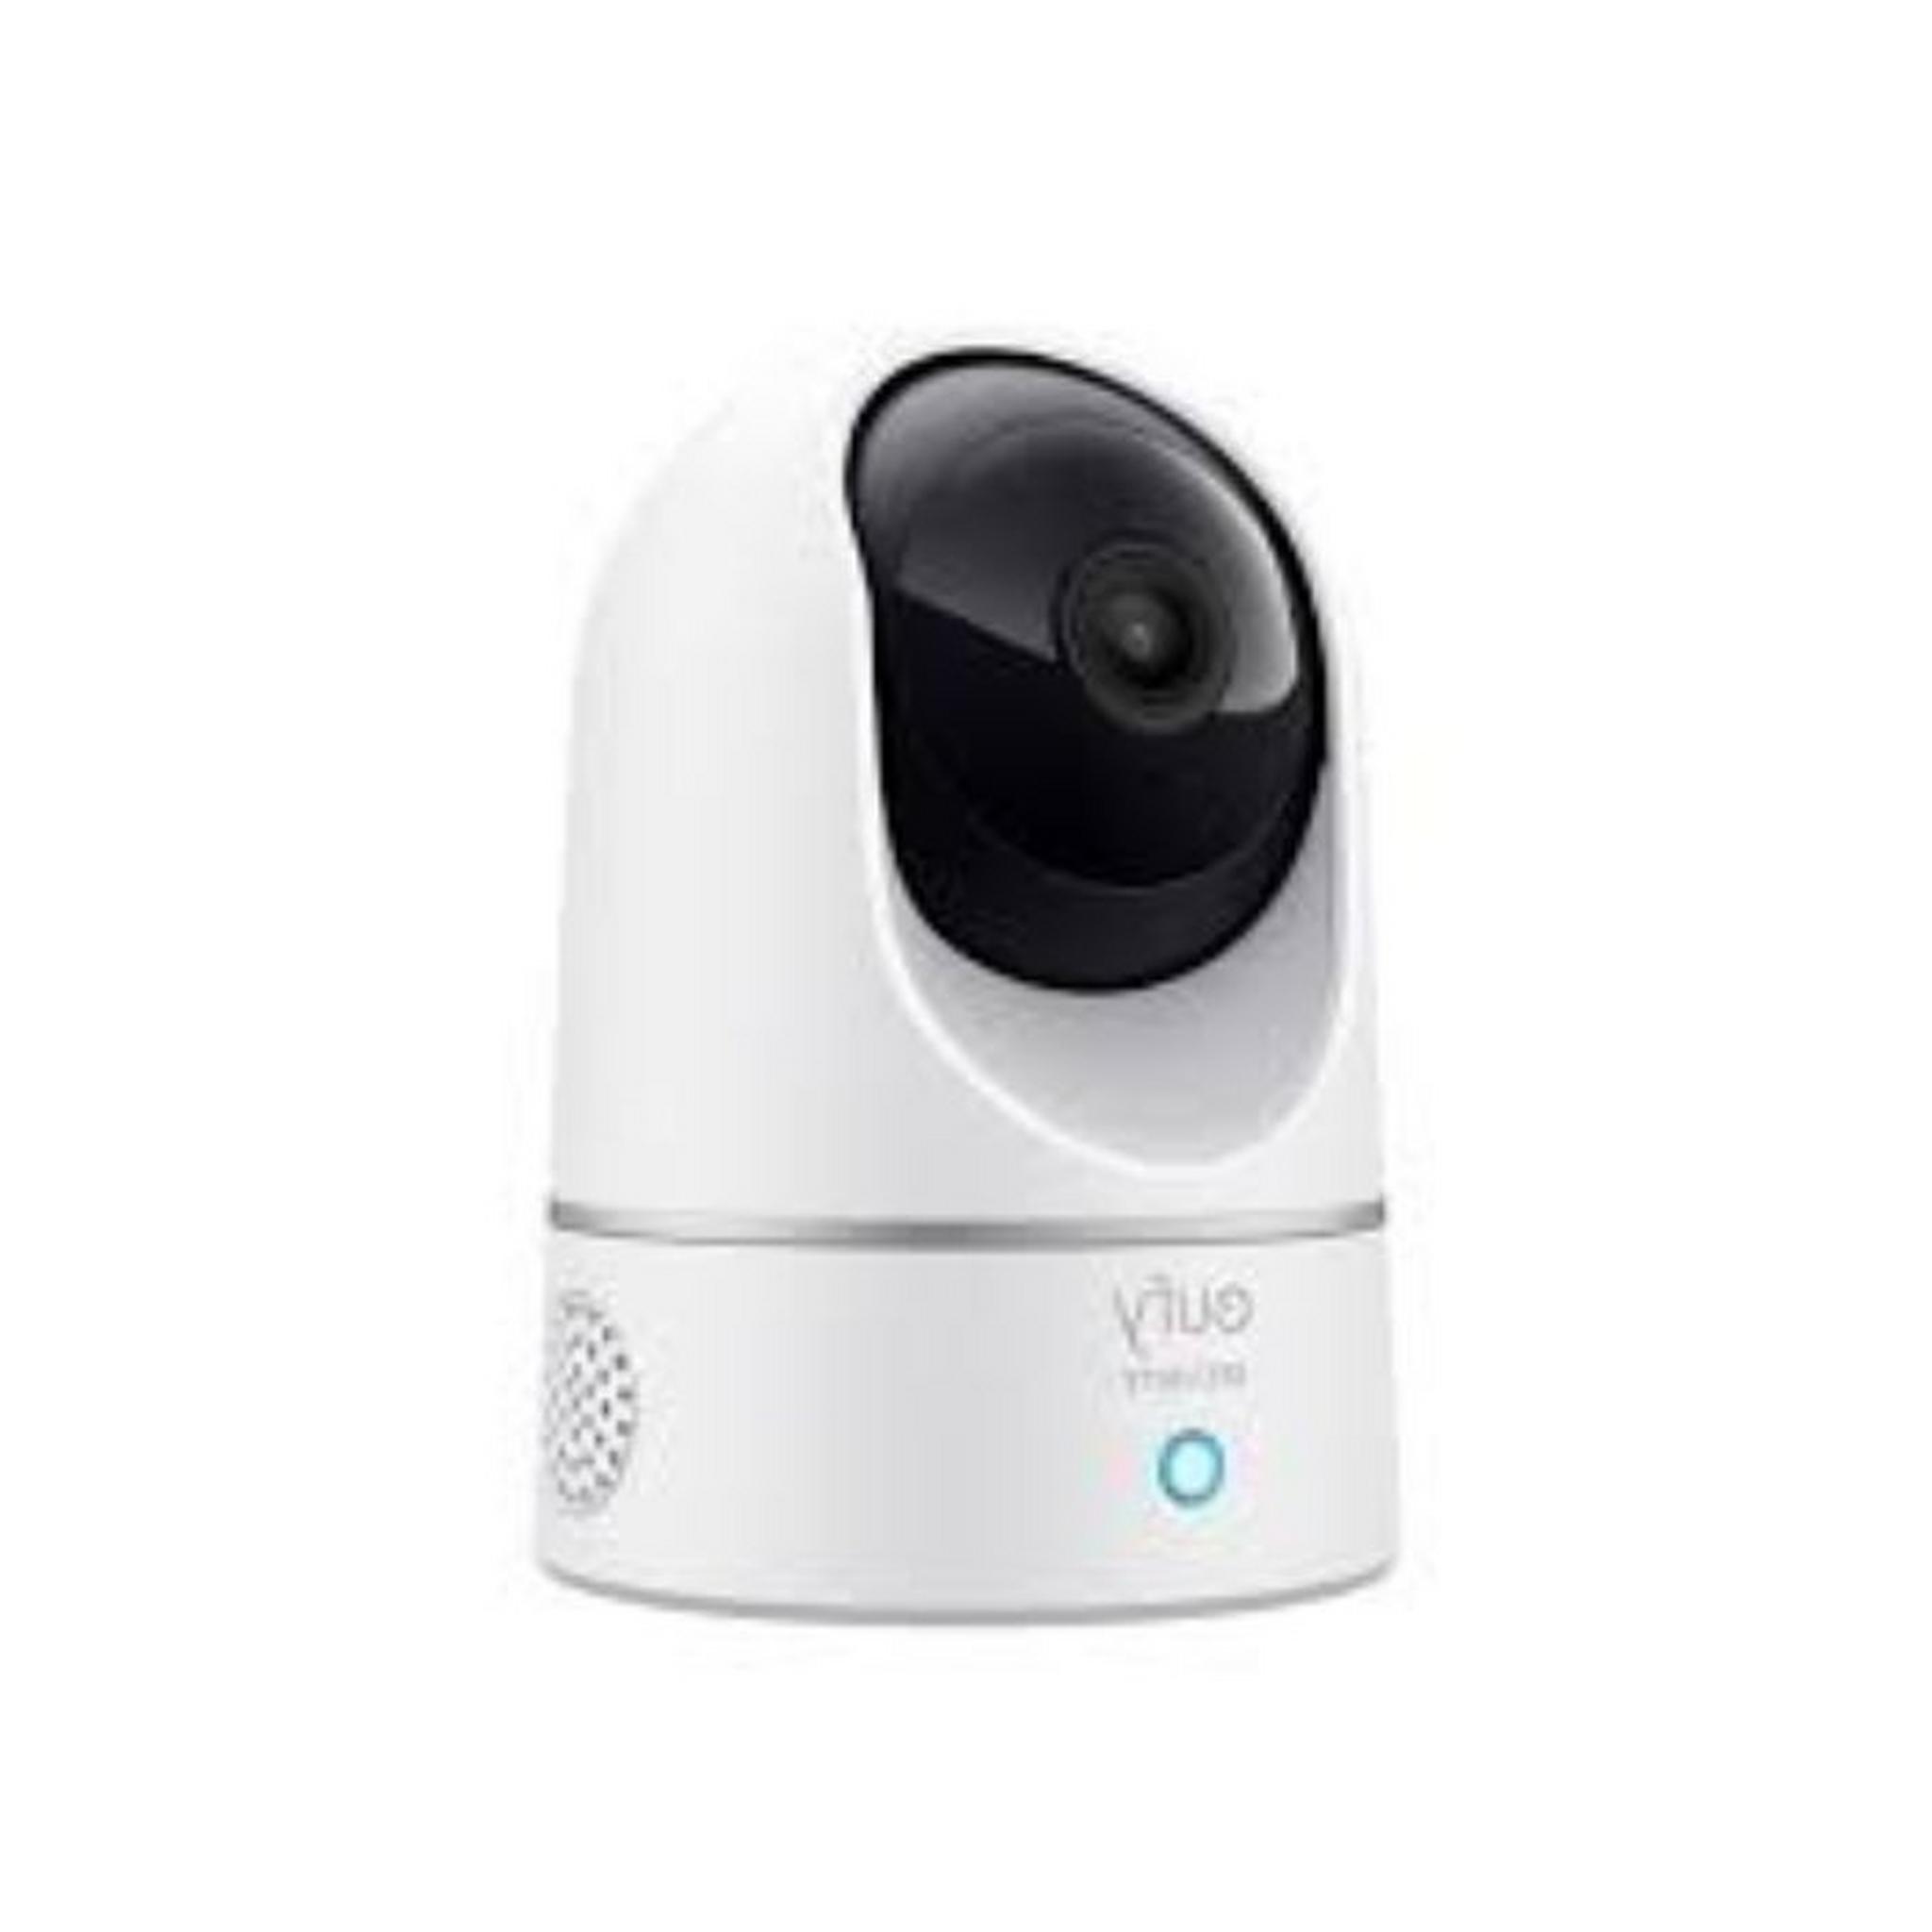 Eufy 2K Pan and Tilt Indoor Surveillance Camera, T8410223 - White